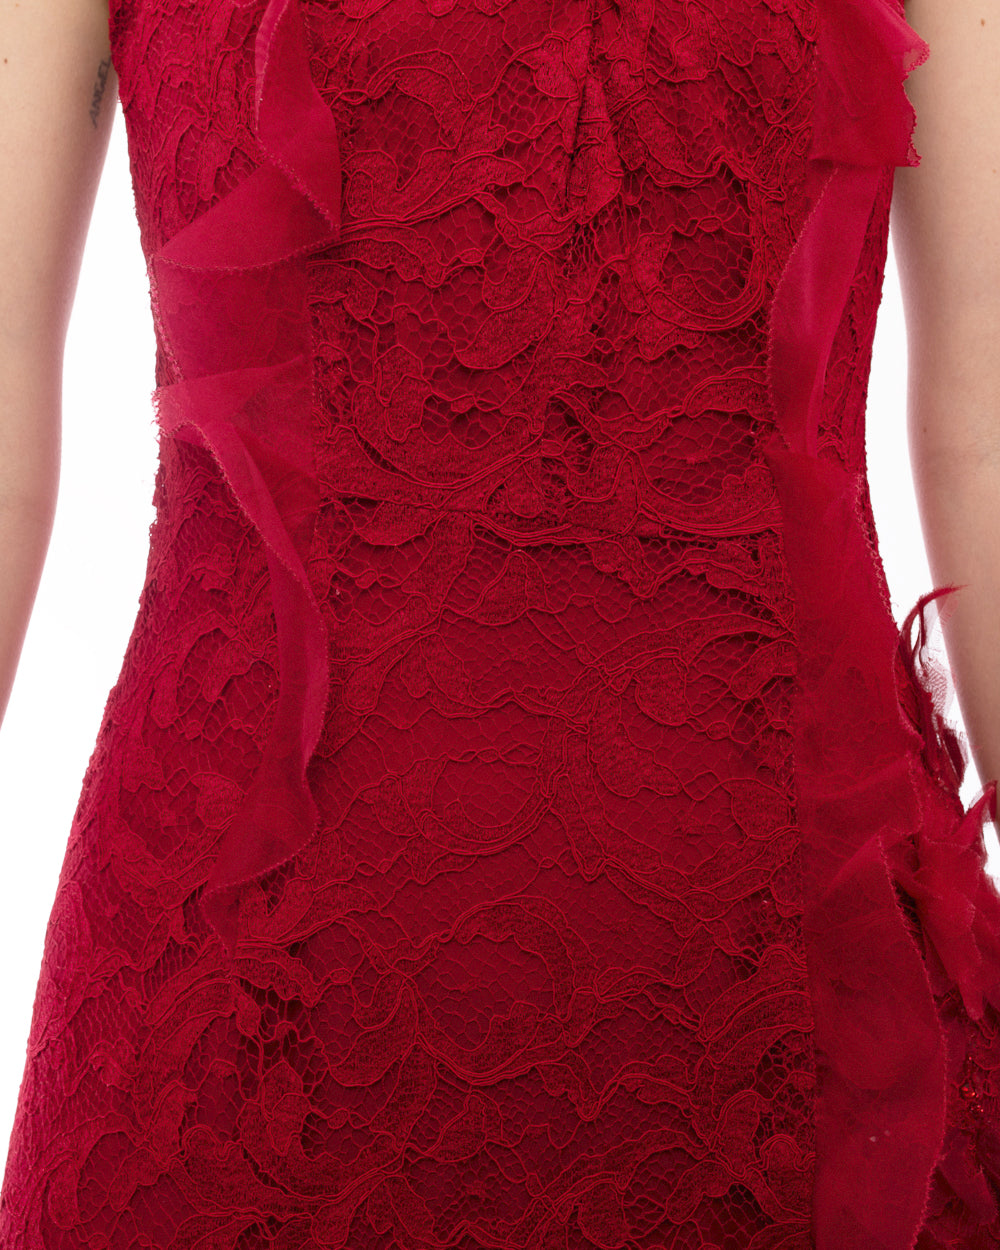 Oscar de la Renta Spring 2016 Red Strapless Lace Gown - 6